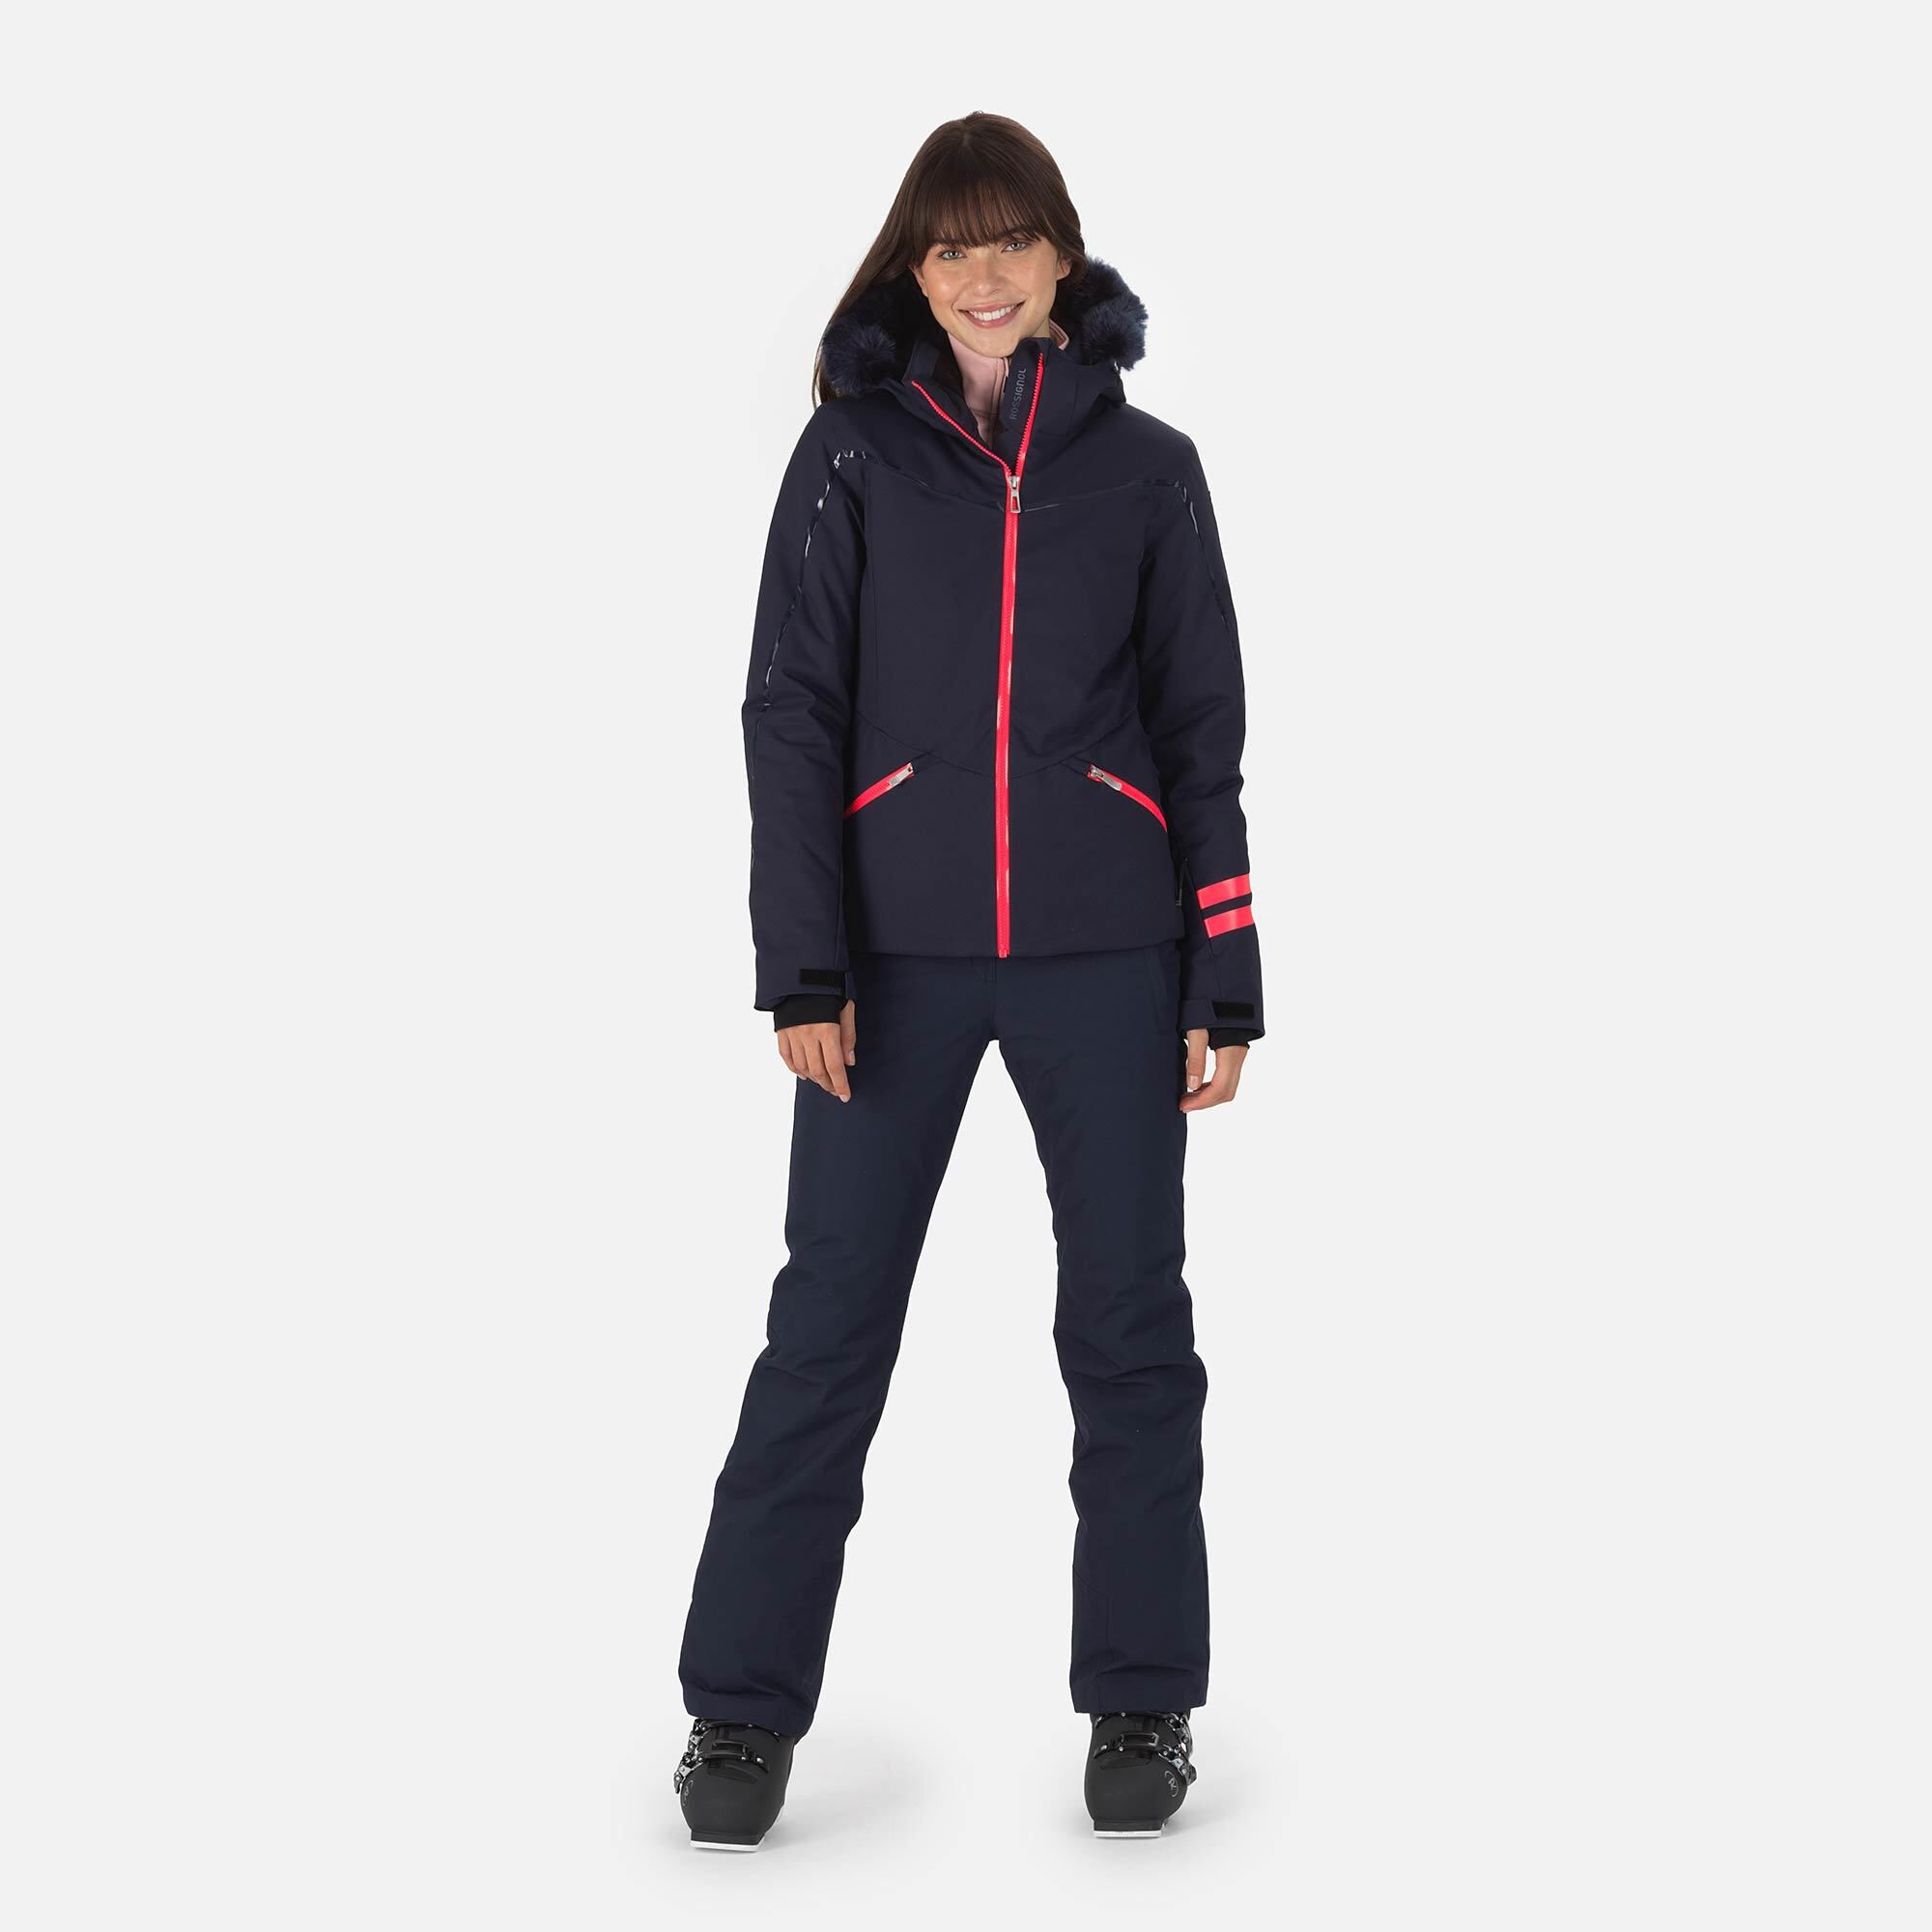 Millet Women's Ski Jackets